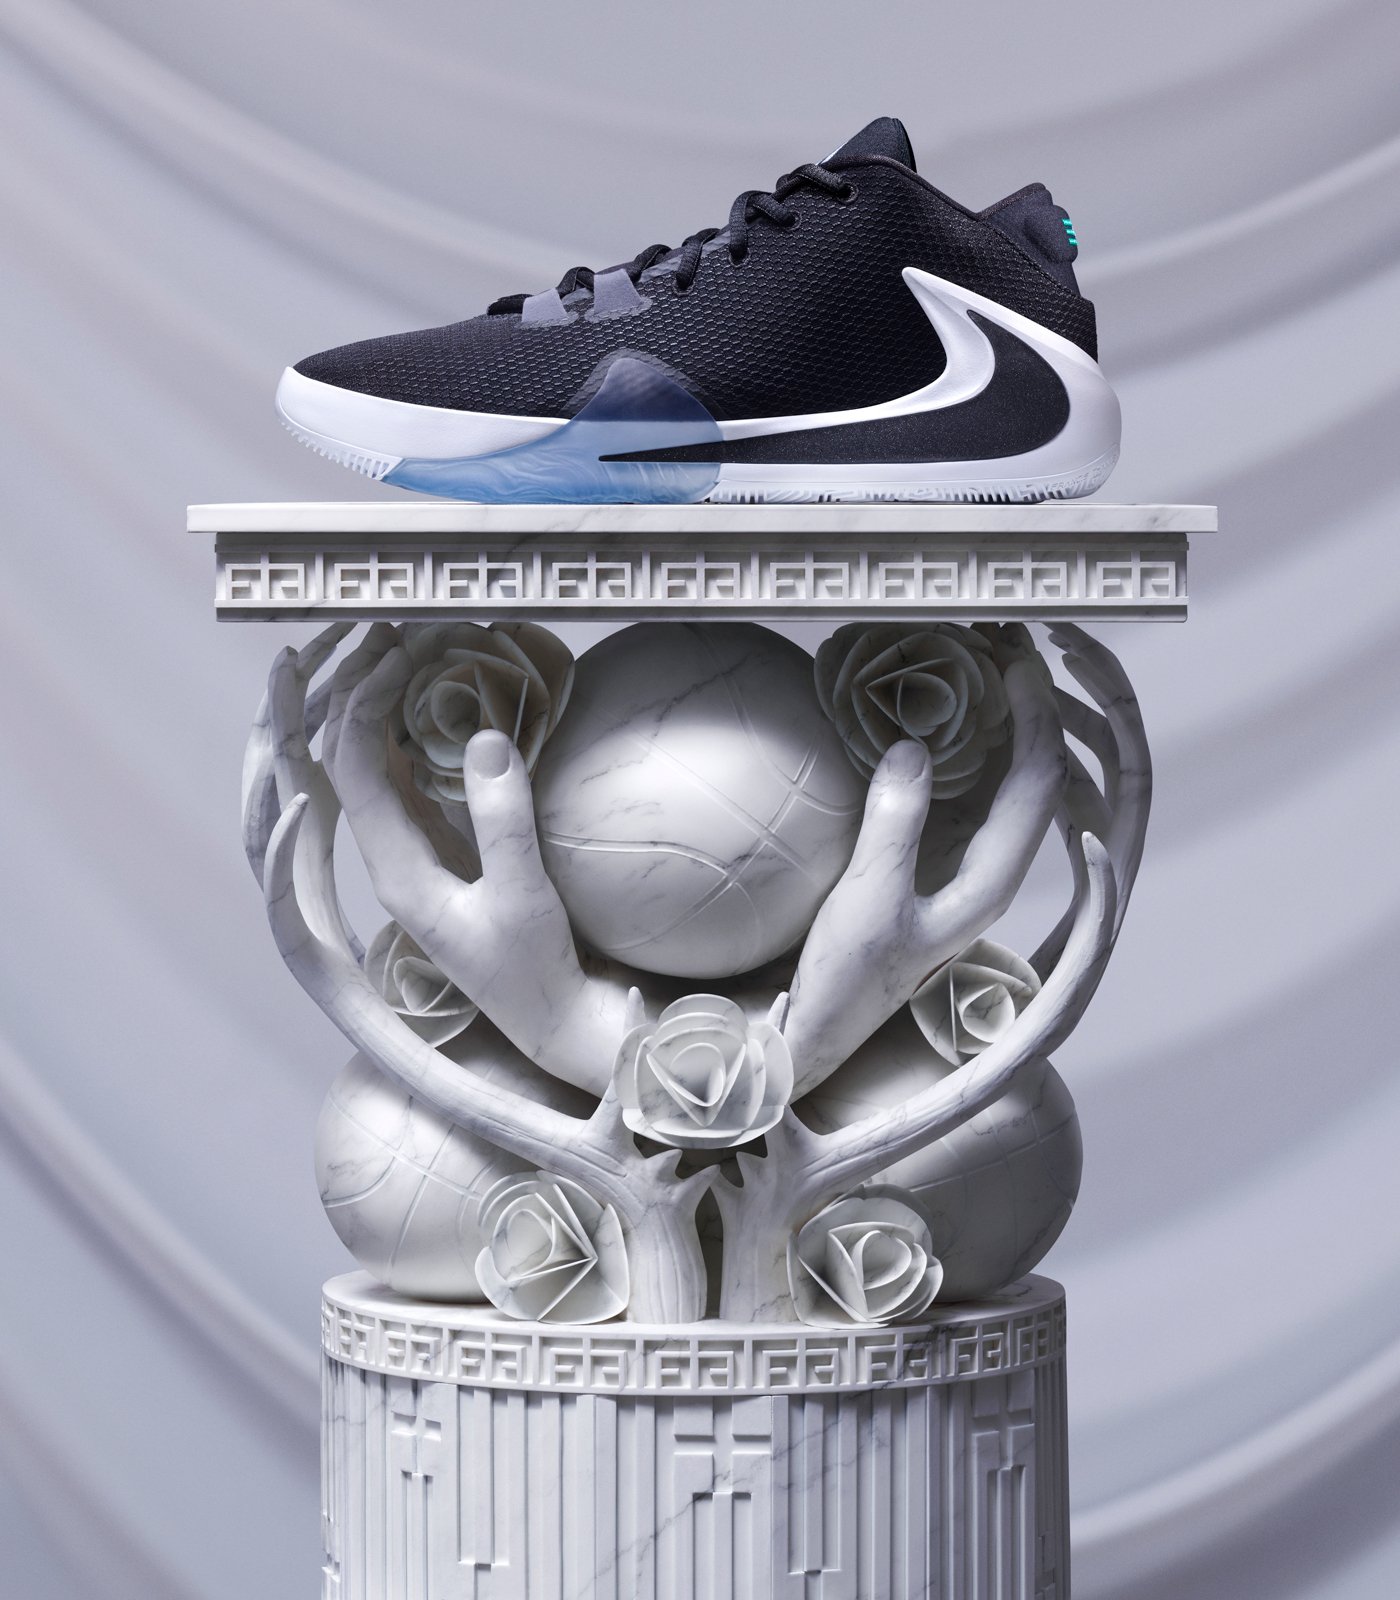 Nike Basketball on X: Introducing the Zoom Freak 1